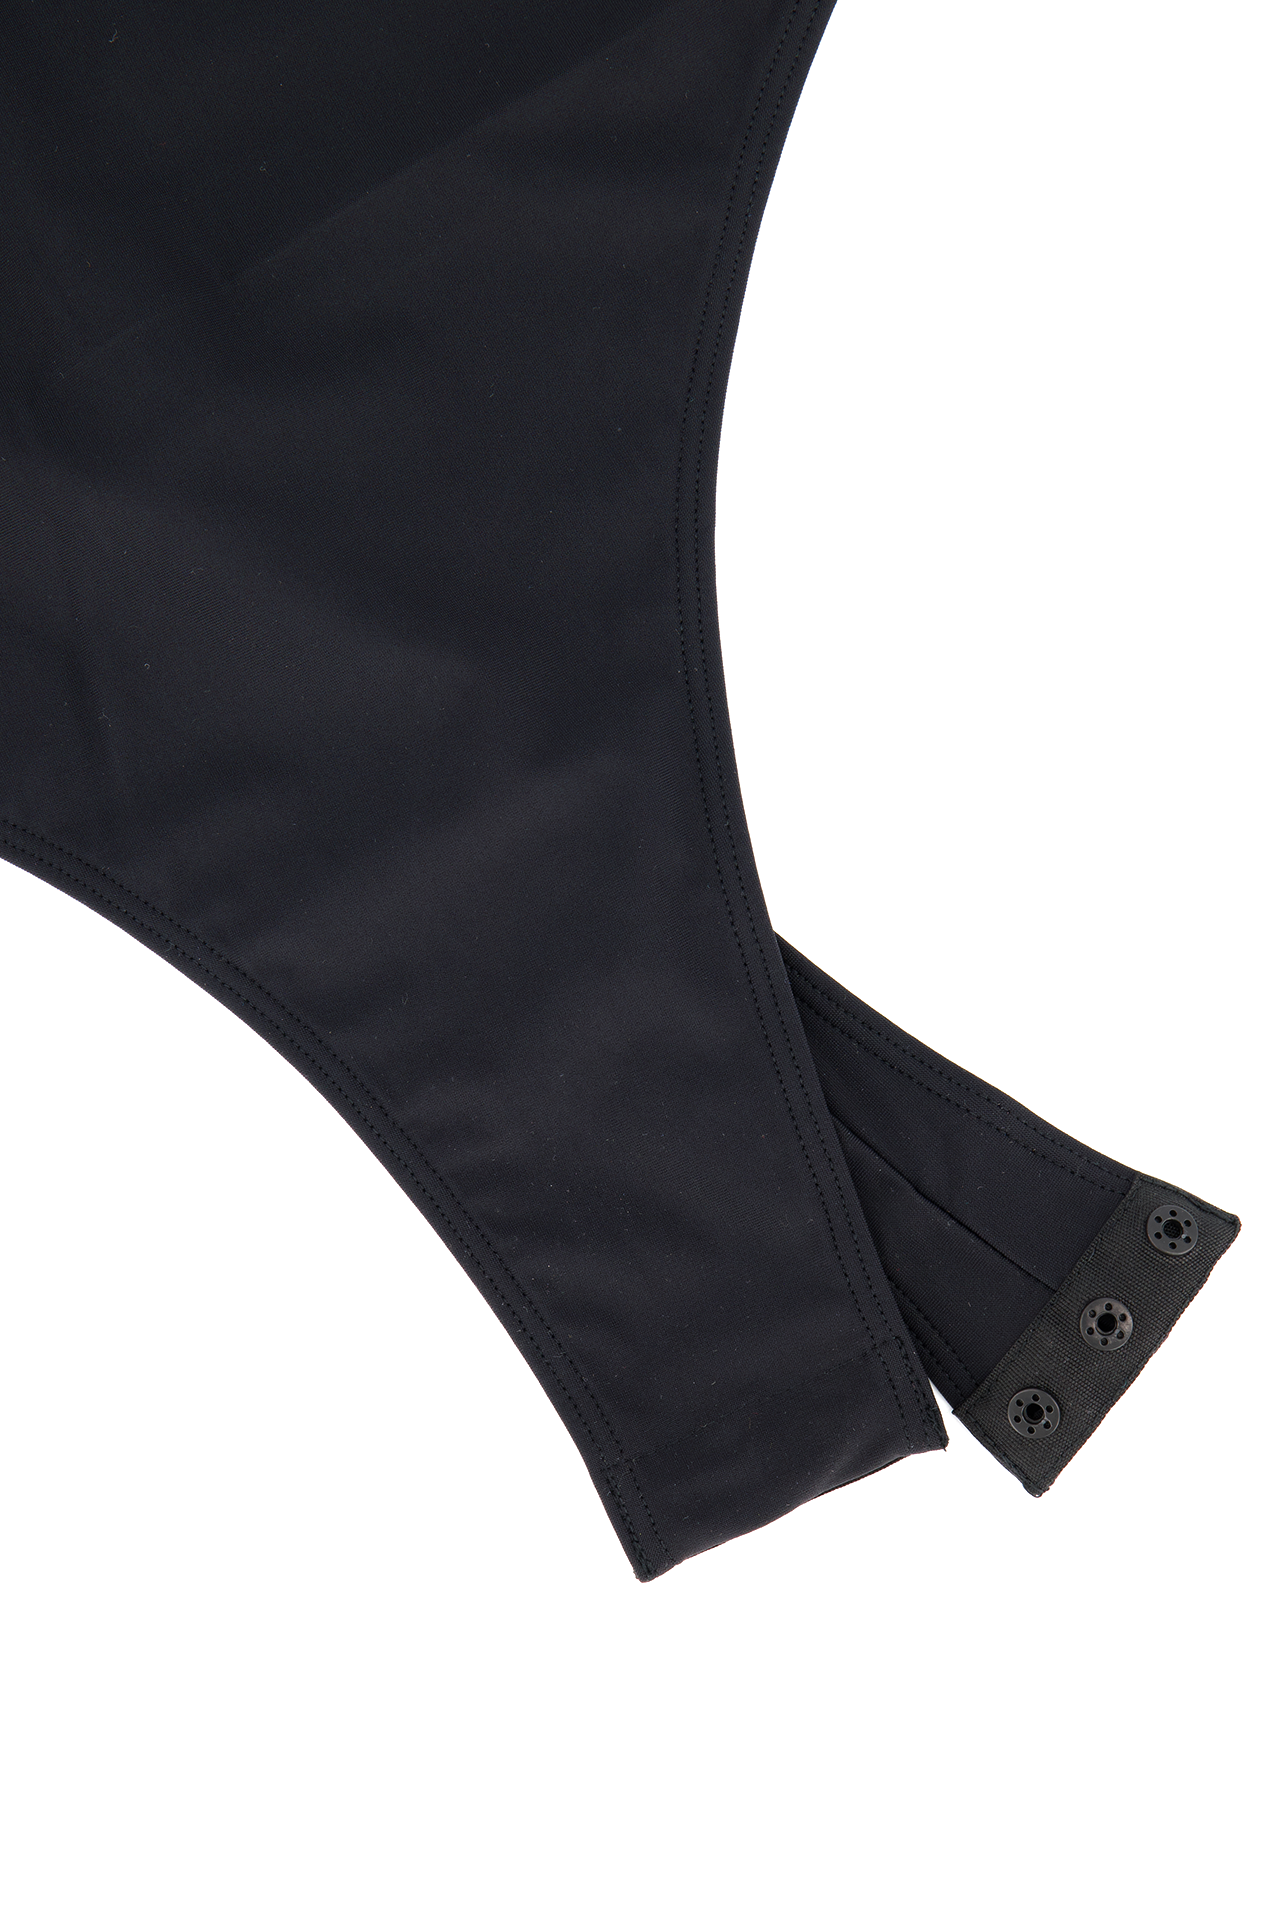 Fleur Du Mal Charlotte Lace V-Neck Bodysuit Black Snap Closure Detail Image (4650308337779)